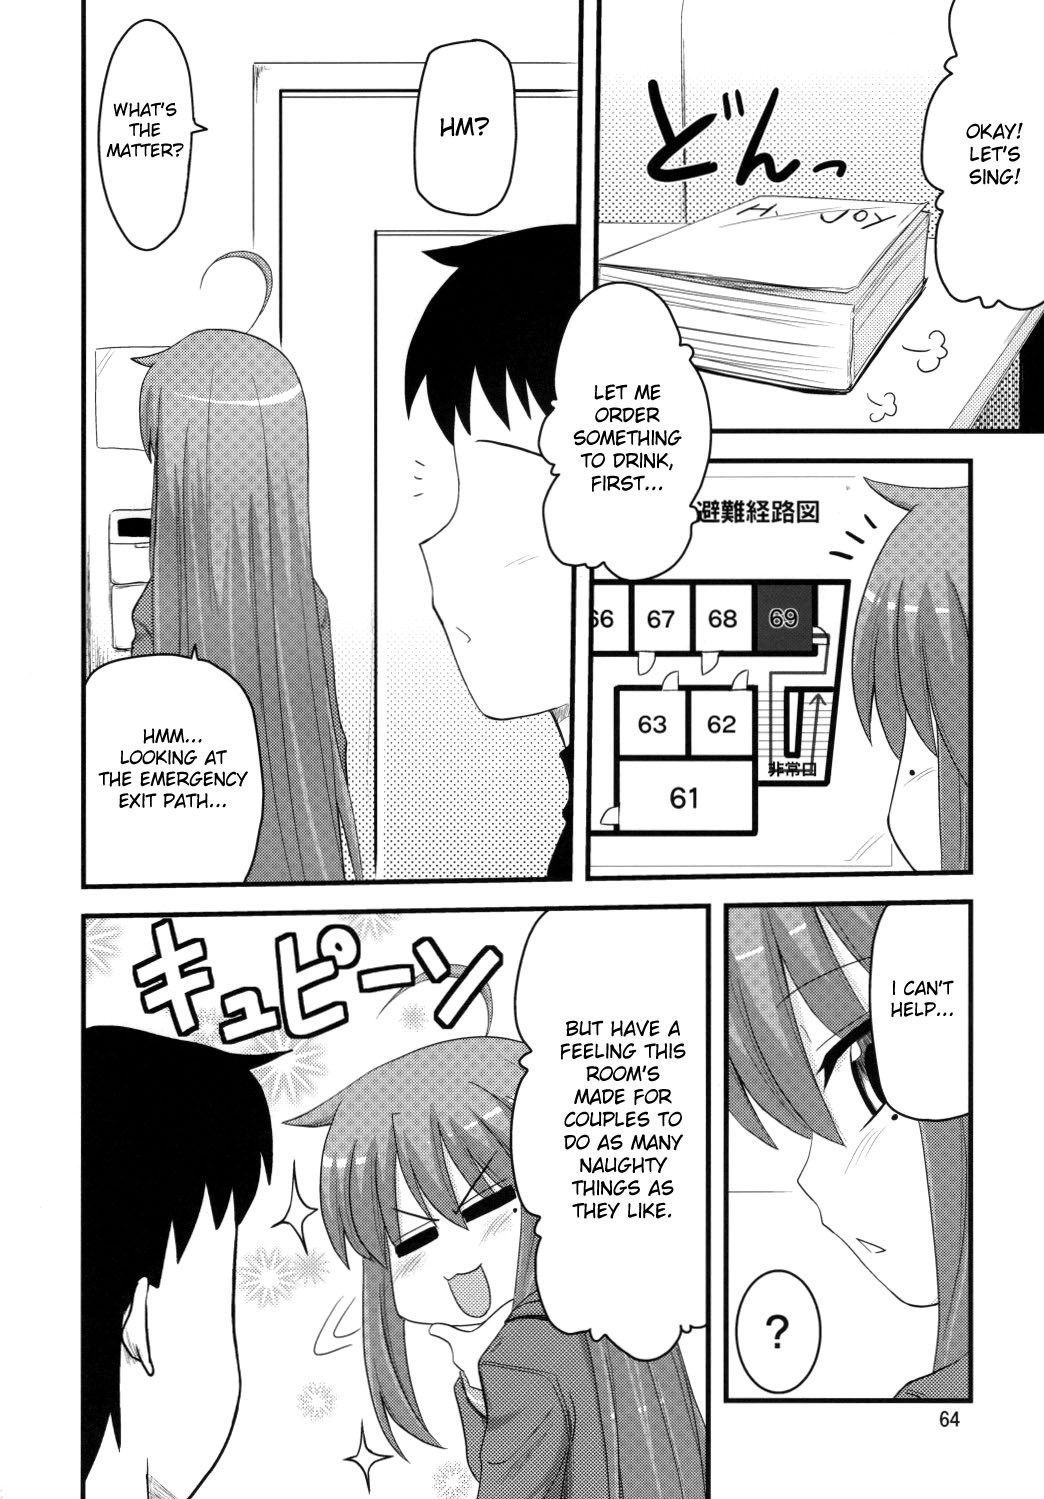 Konata and Oh-zu 4 people each and every one + 1 hentai manga picture 60